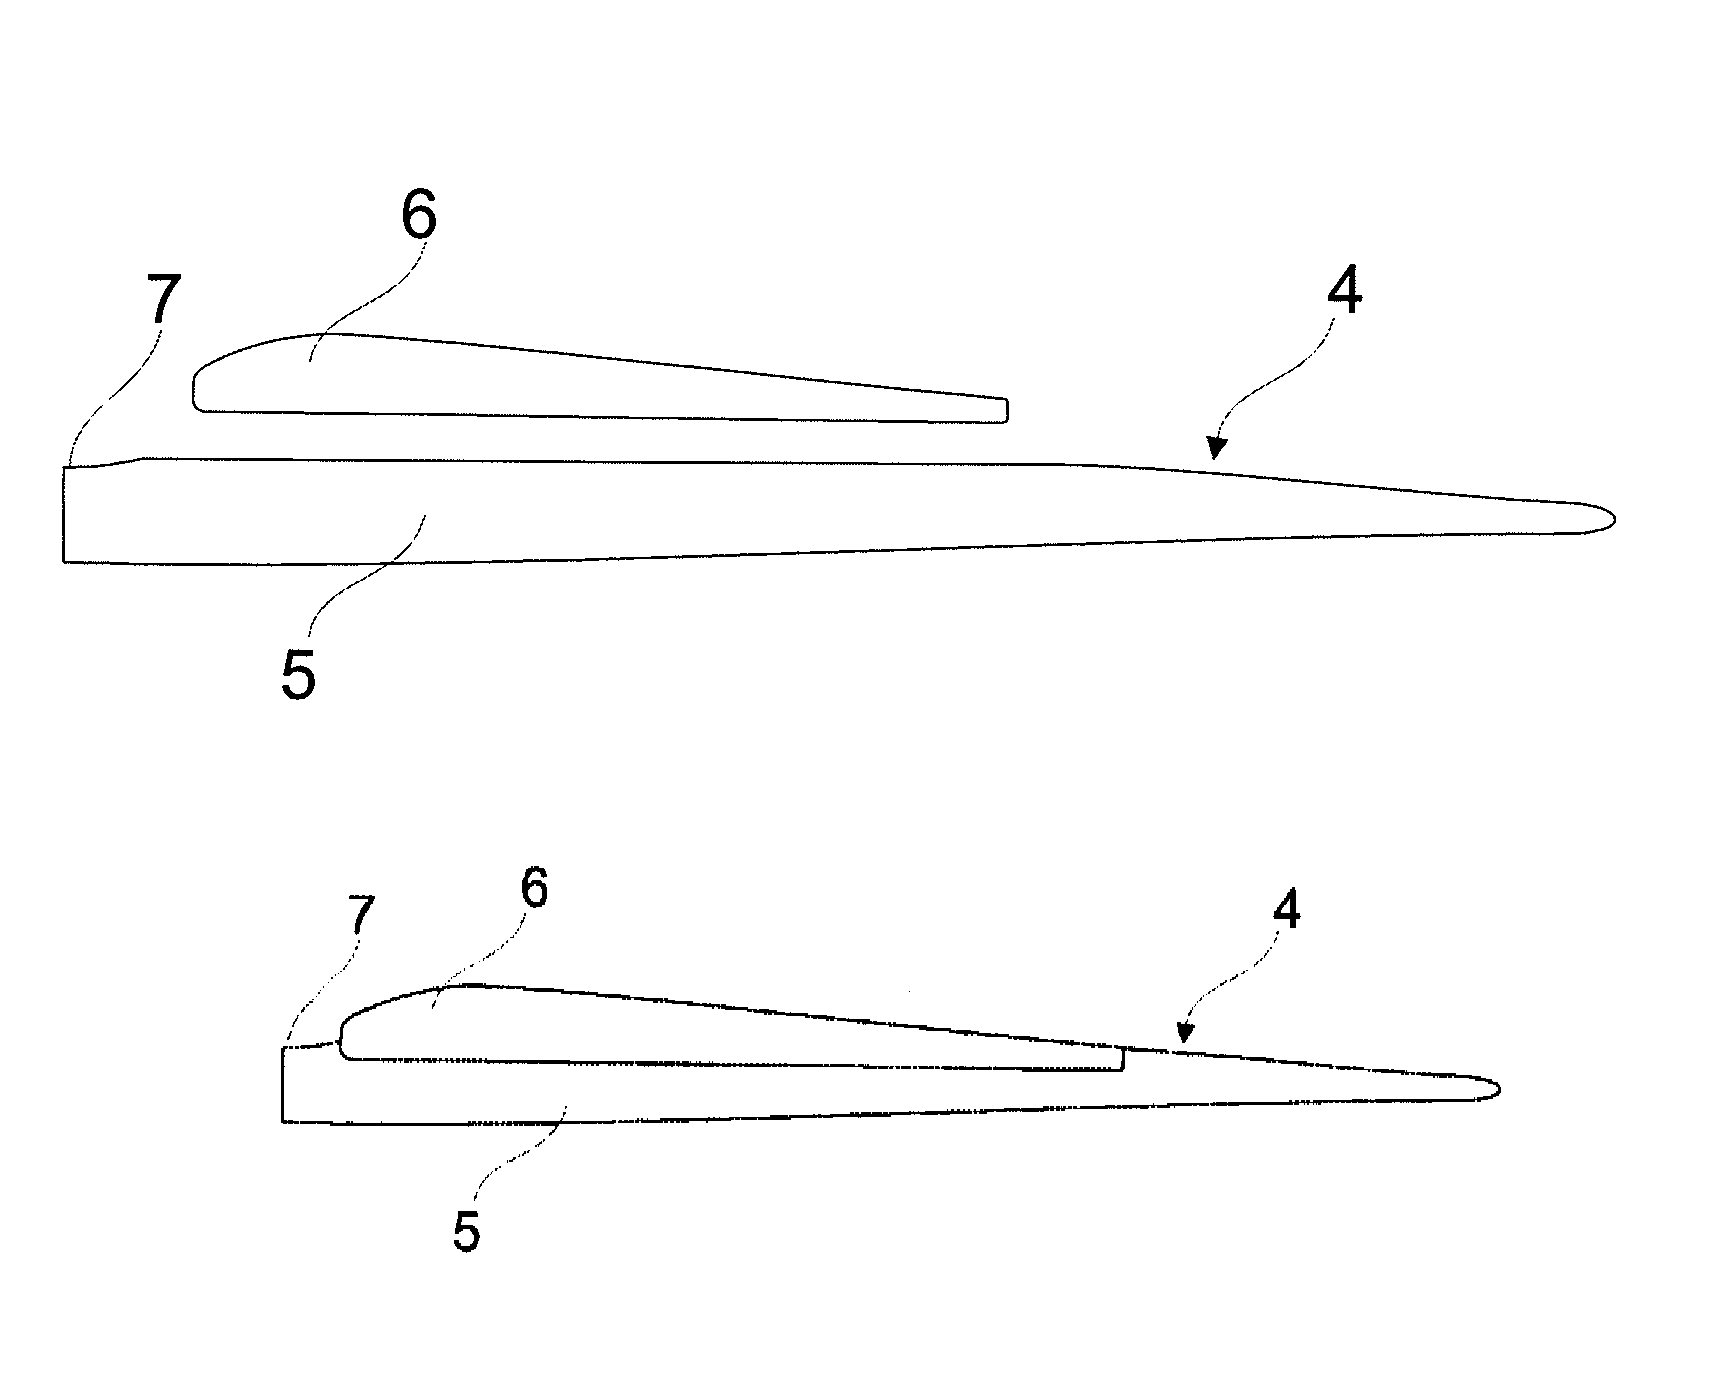 Multi-element blade with aerodynamic profiles